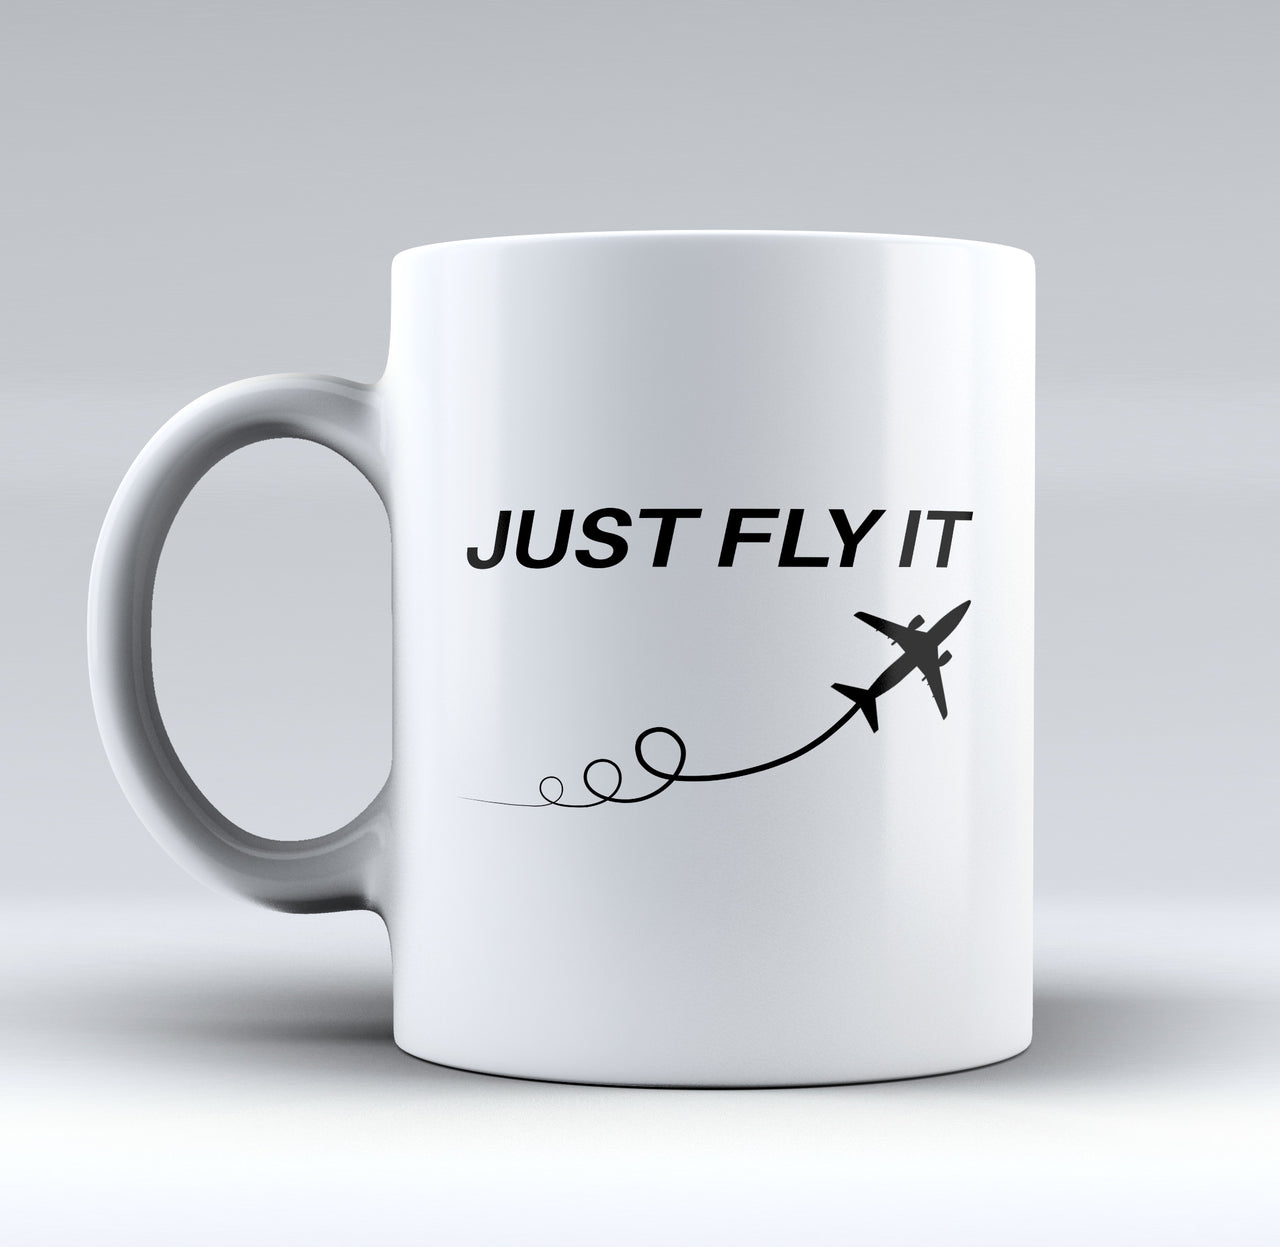 Just Fly It Designed Mugs